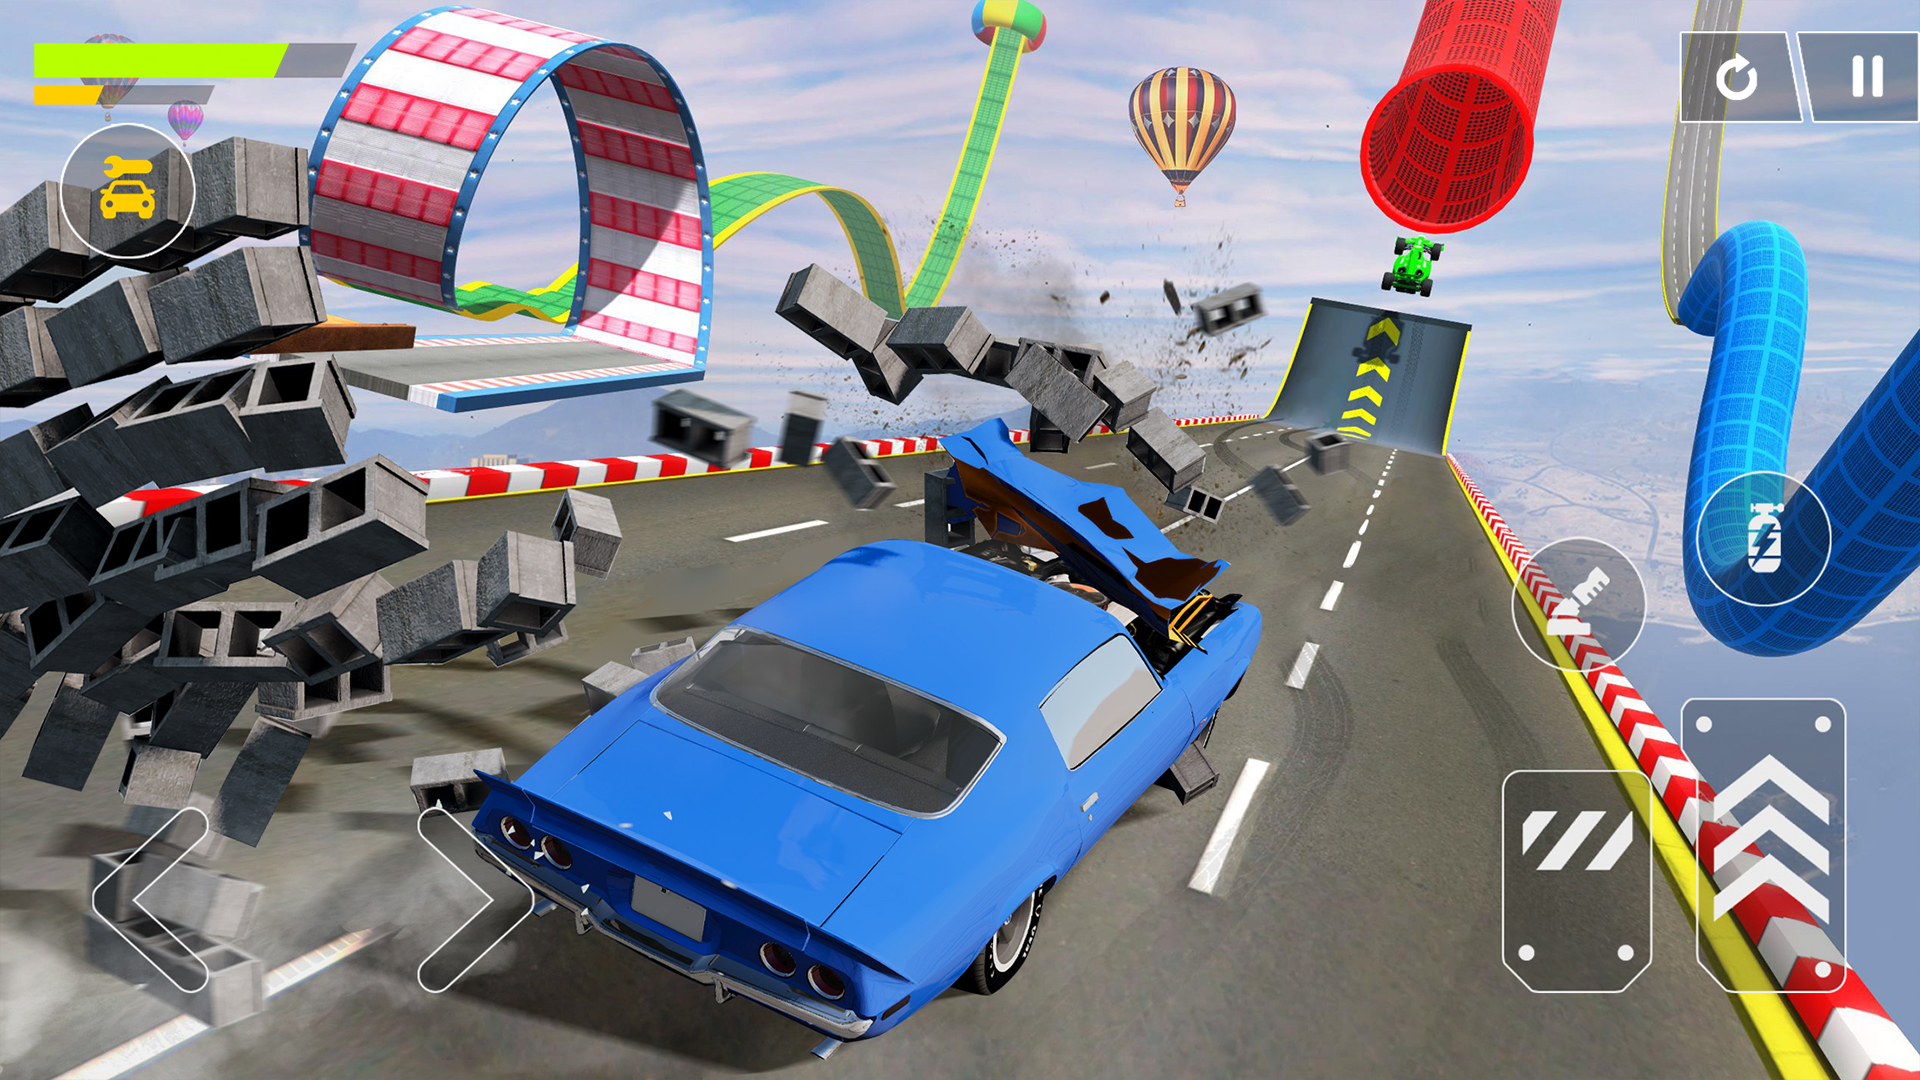 Flying Car Crash: Real Stunts